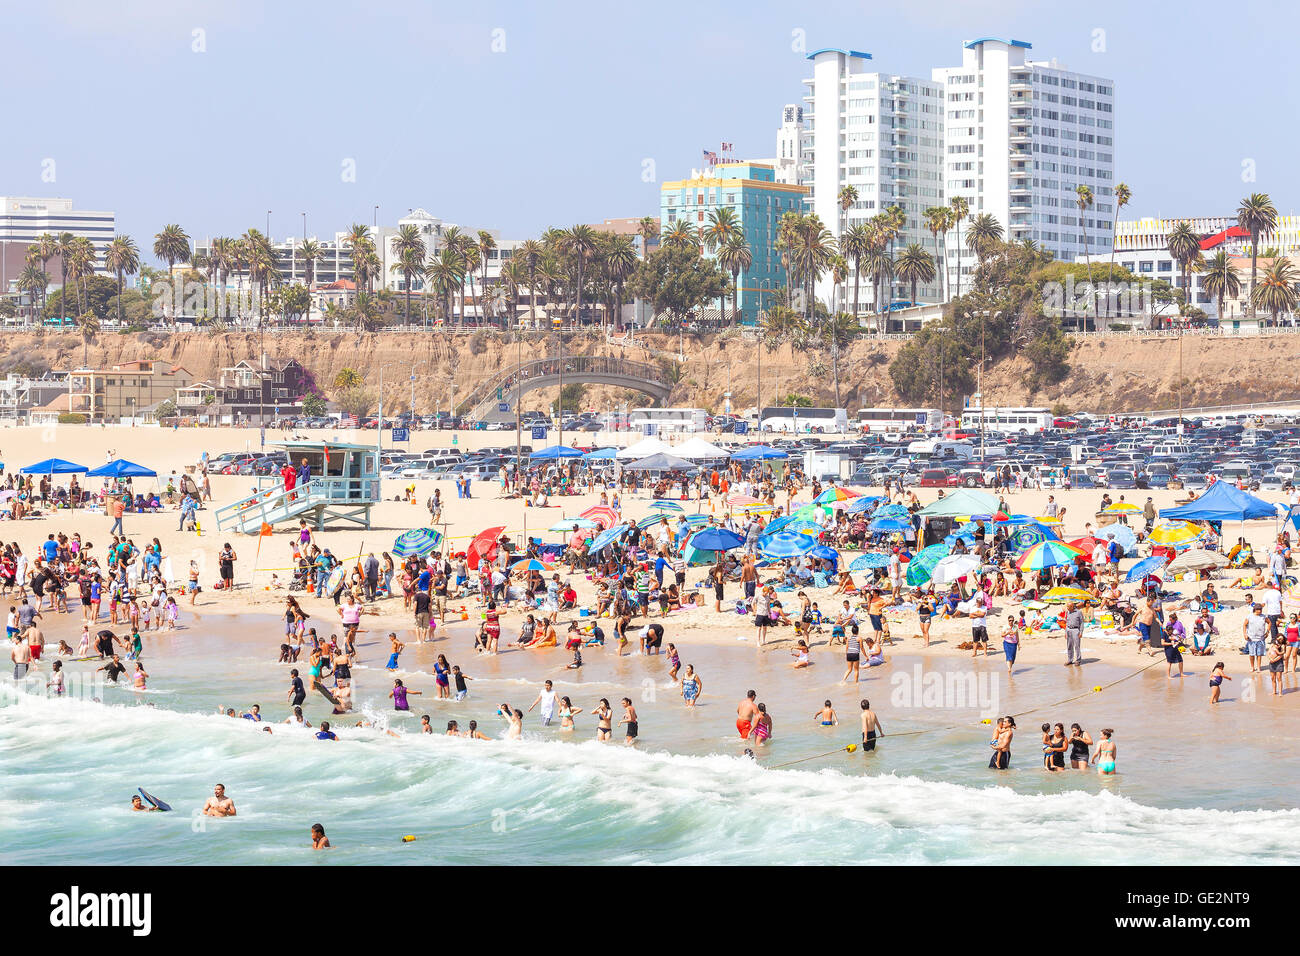 Santa Monica Beach crowded with people during peak season. Stock Photo